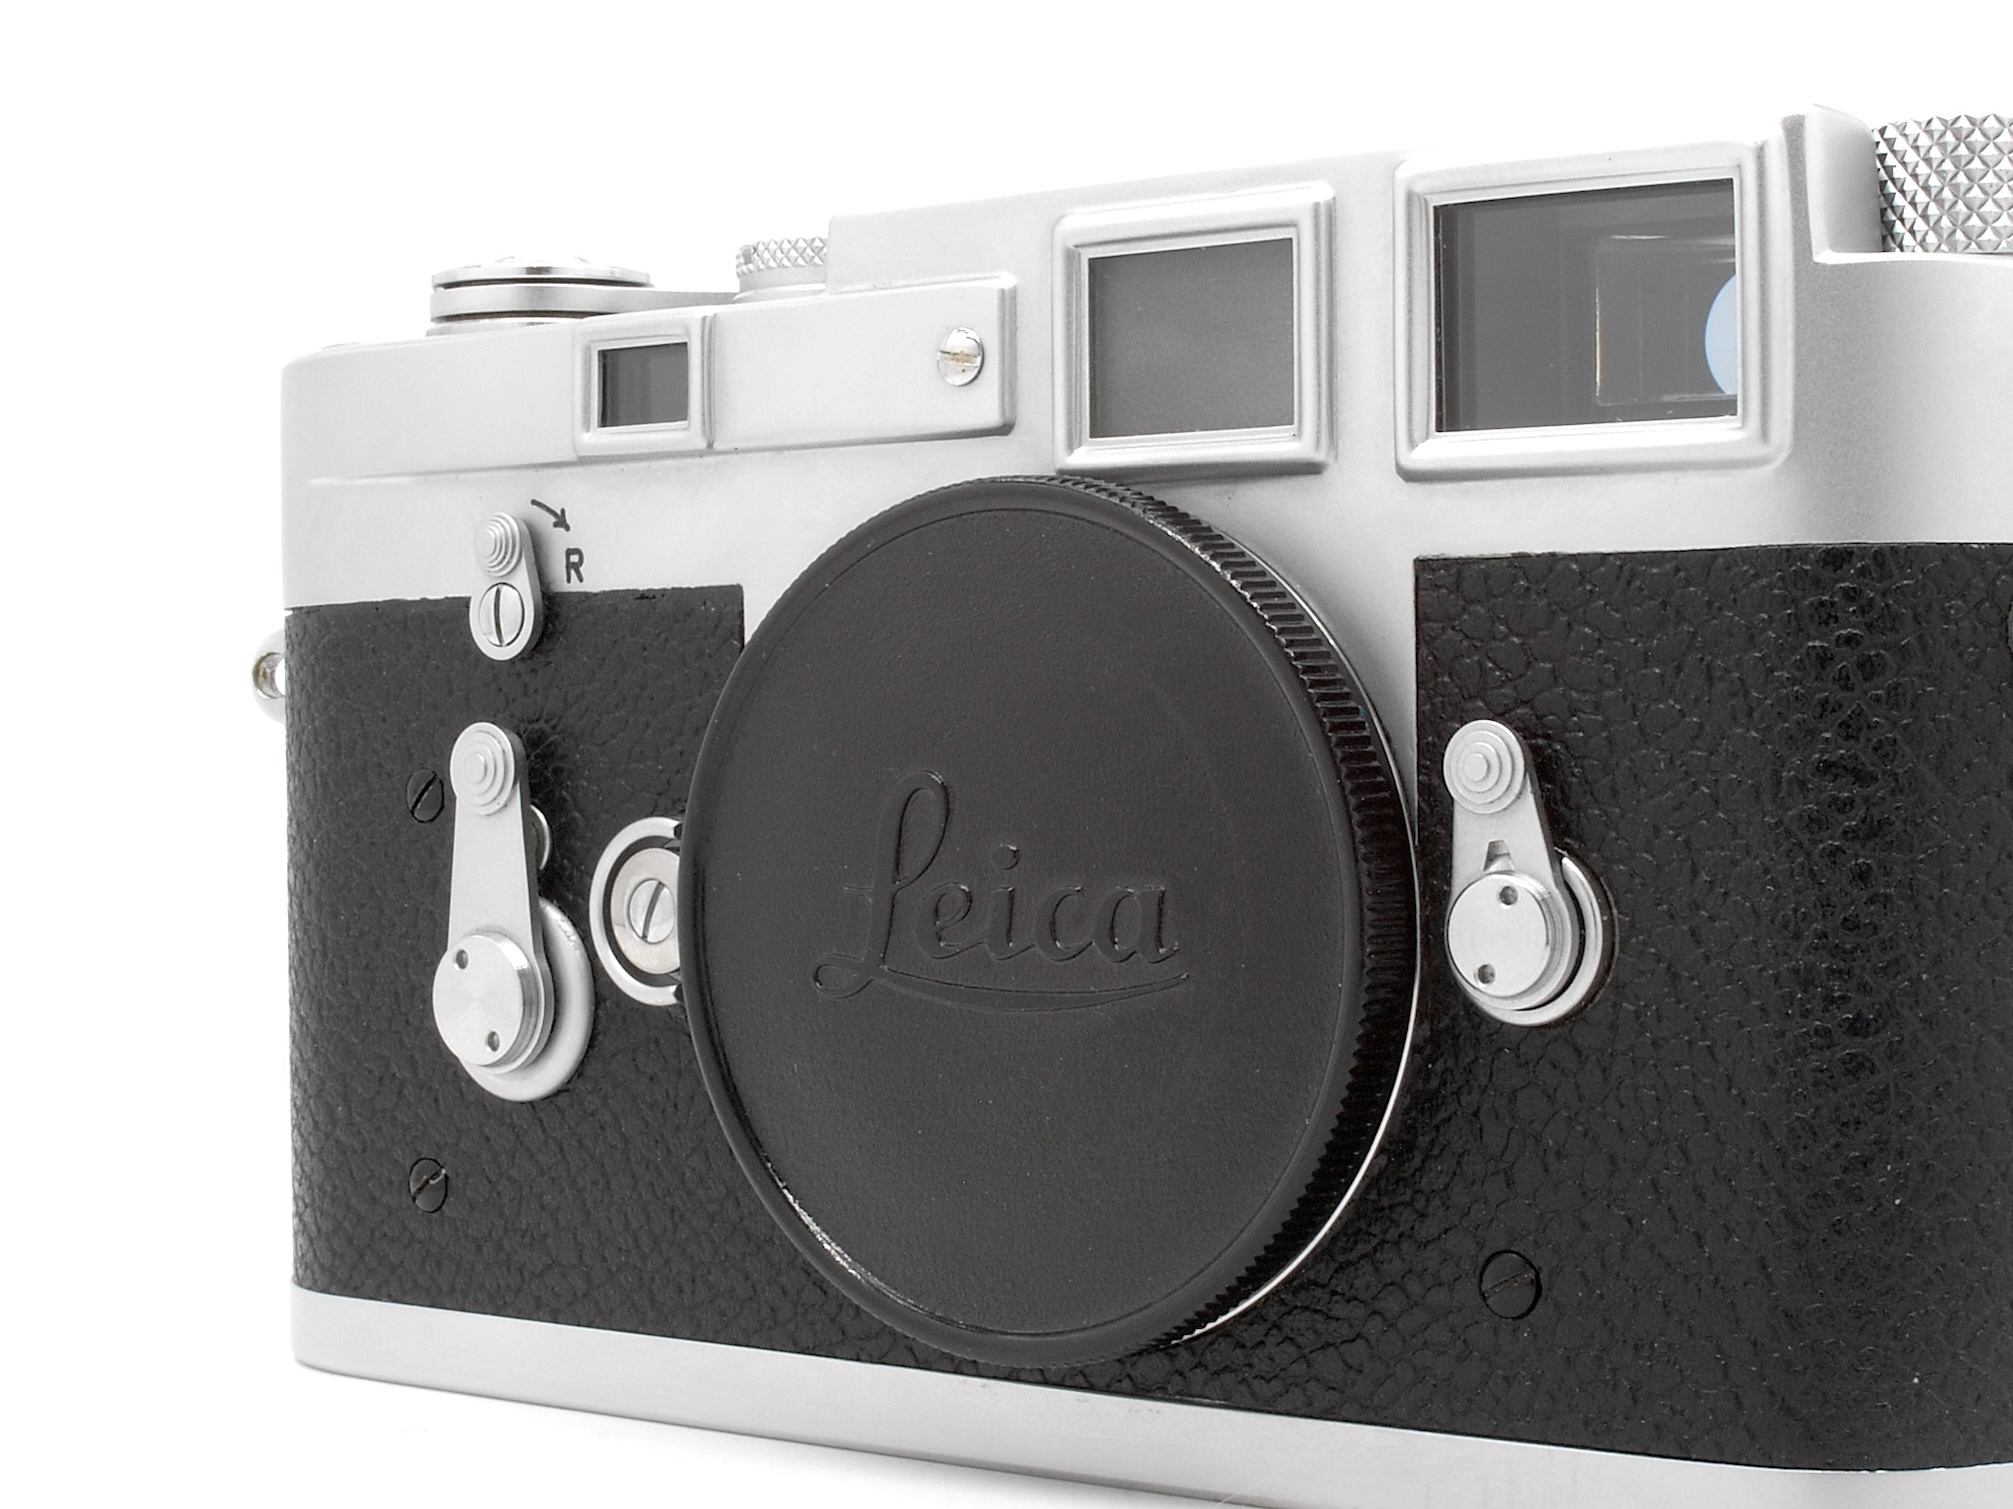 Leica M3 chrom mit Leicameter MC